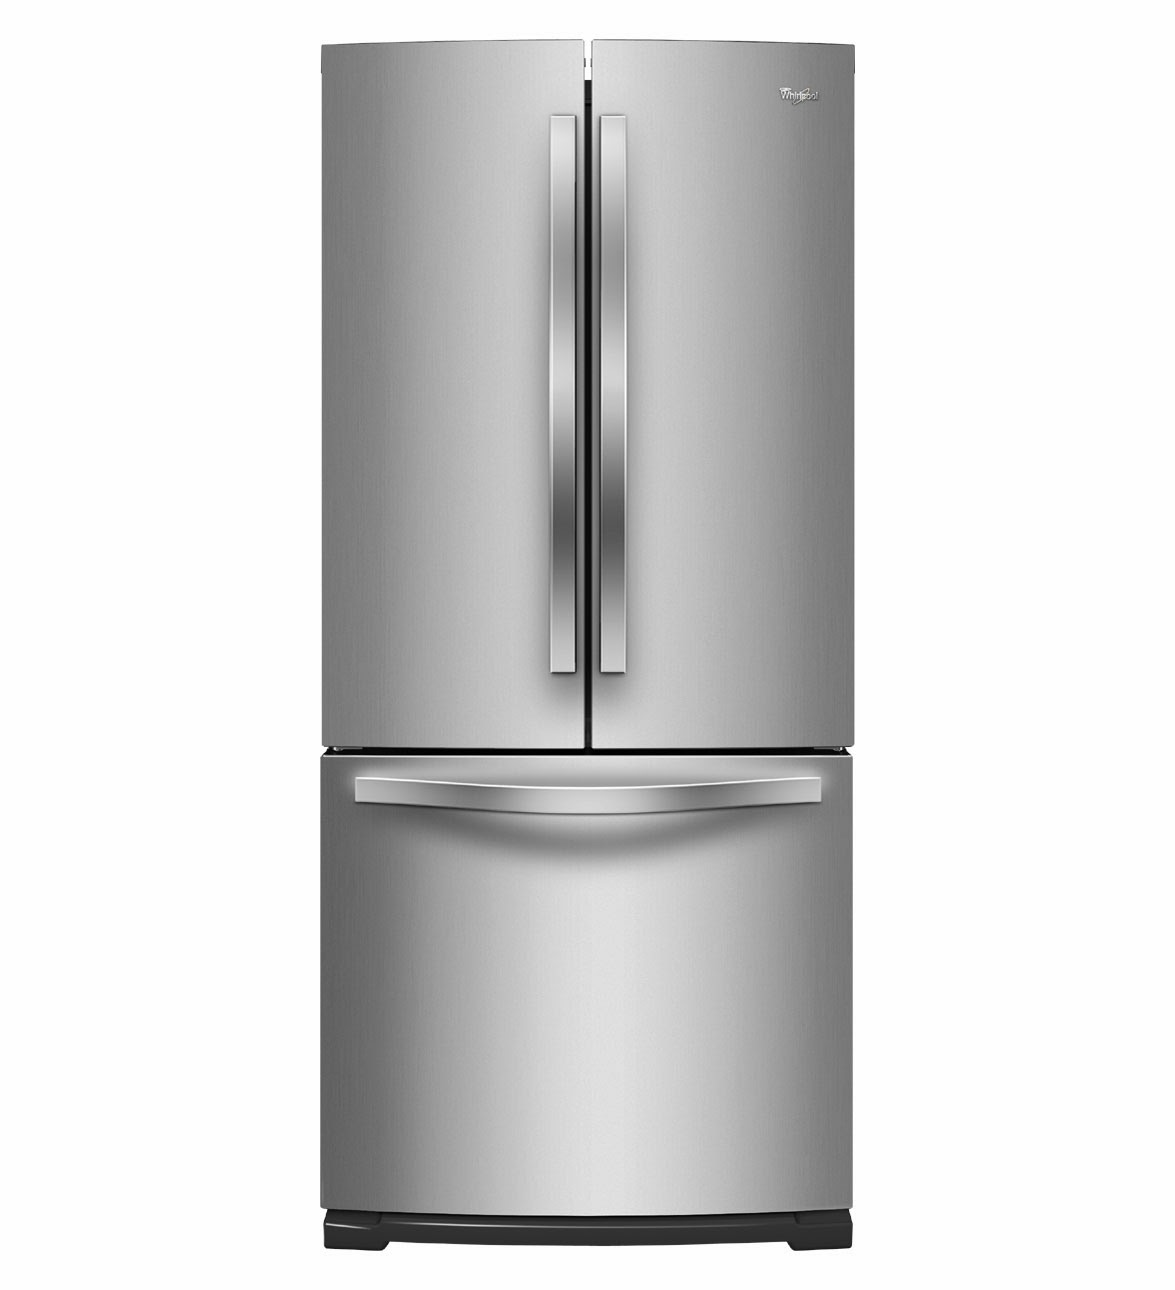 whirlpool-refrigerator-brand-wrf560smym-whirlpool-french-door-refrigerator